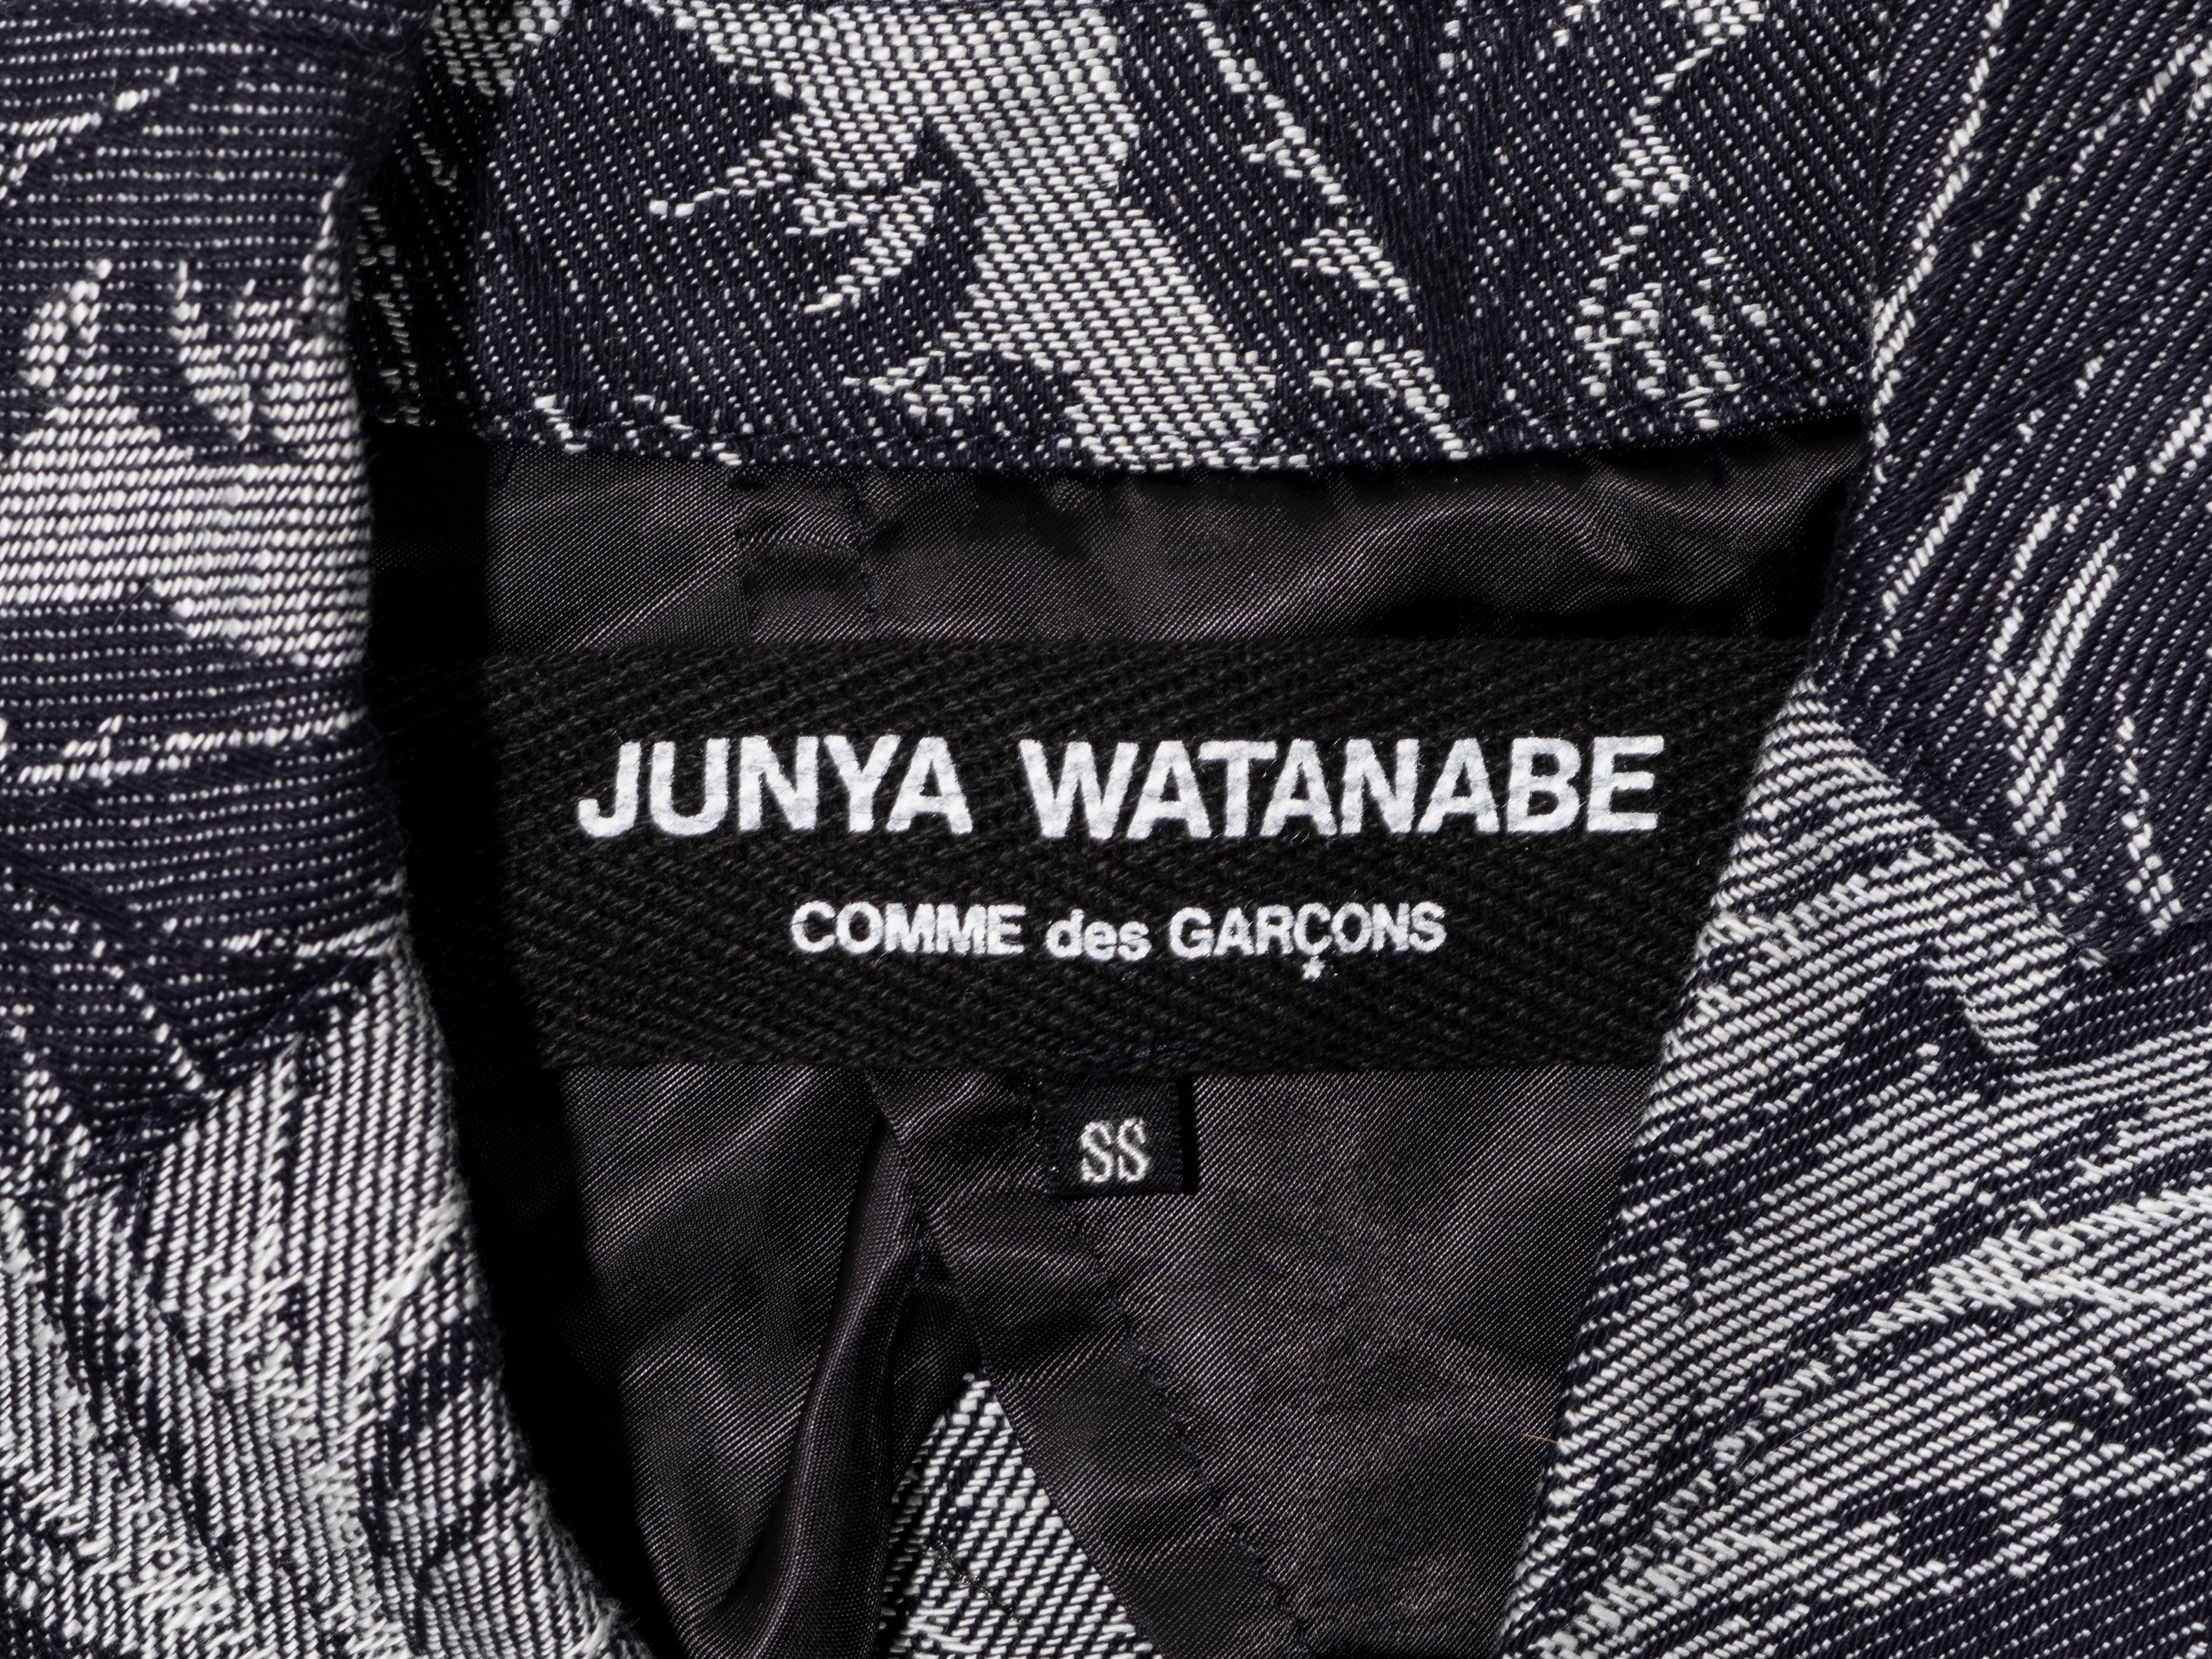 Junya Watanabe indigo denim brocade tailcoat jacket and pants set, ss 2007 For Sale 3